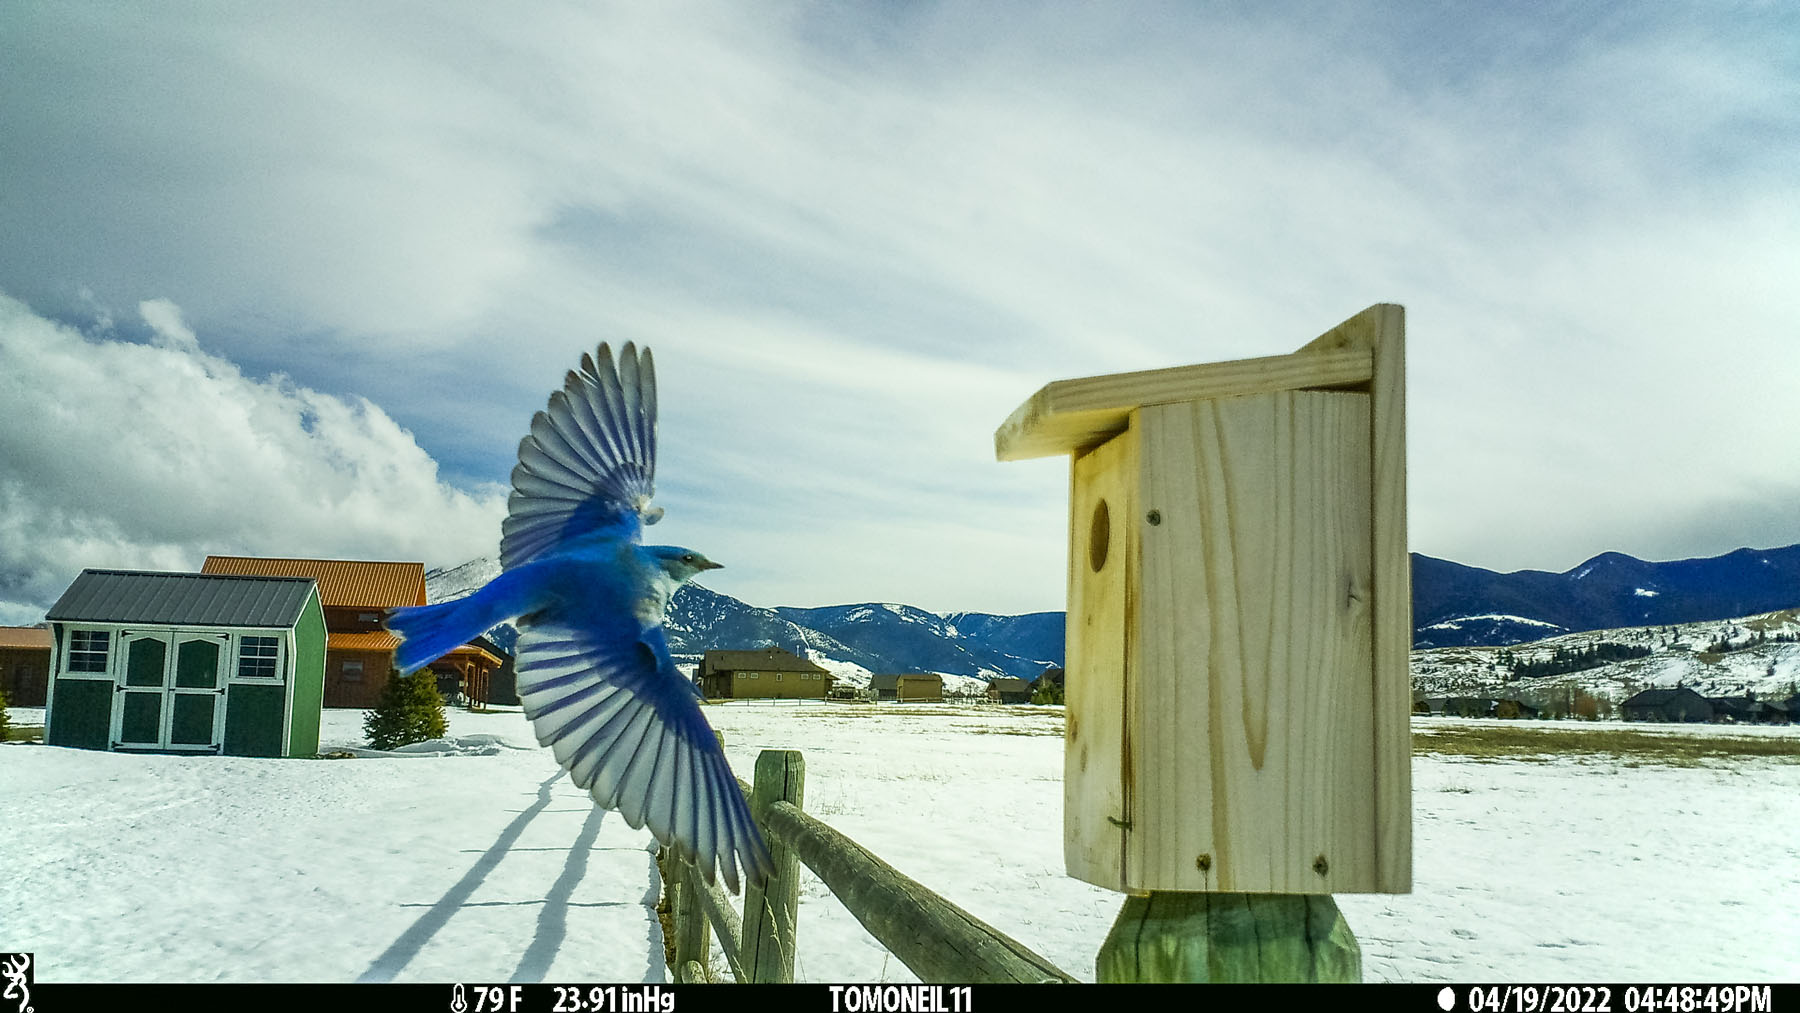 Bluebird on trailcam.  Click for next photo.